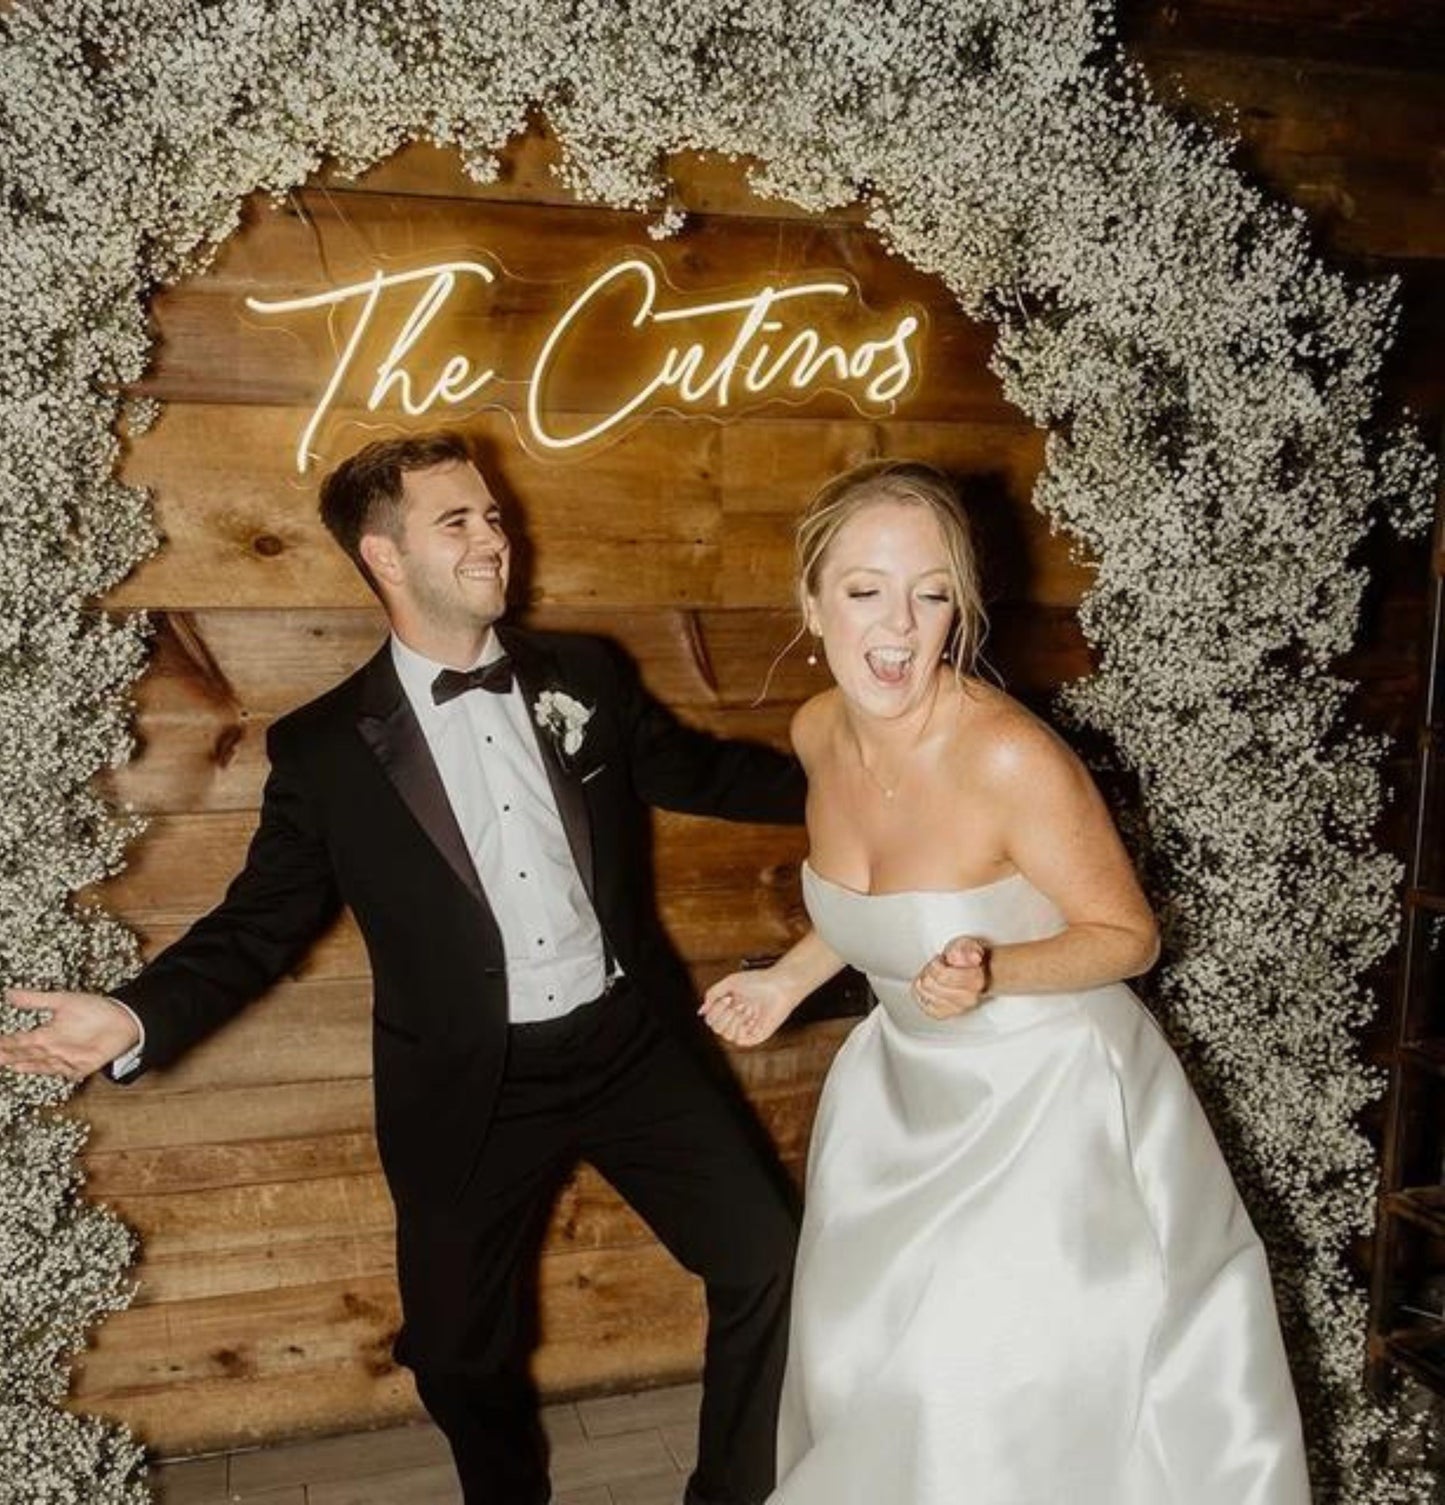 The Cutinos Wedding Neon Sign